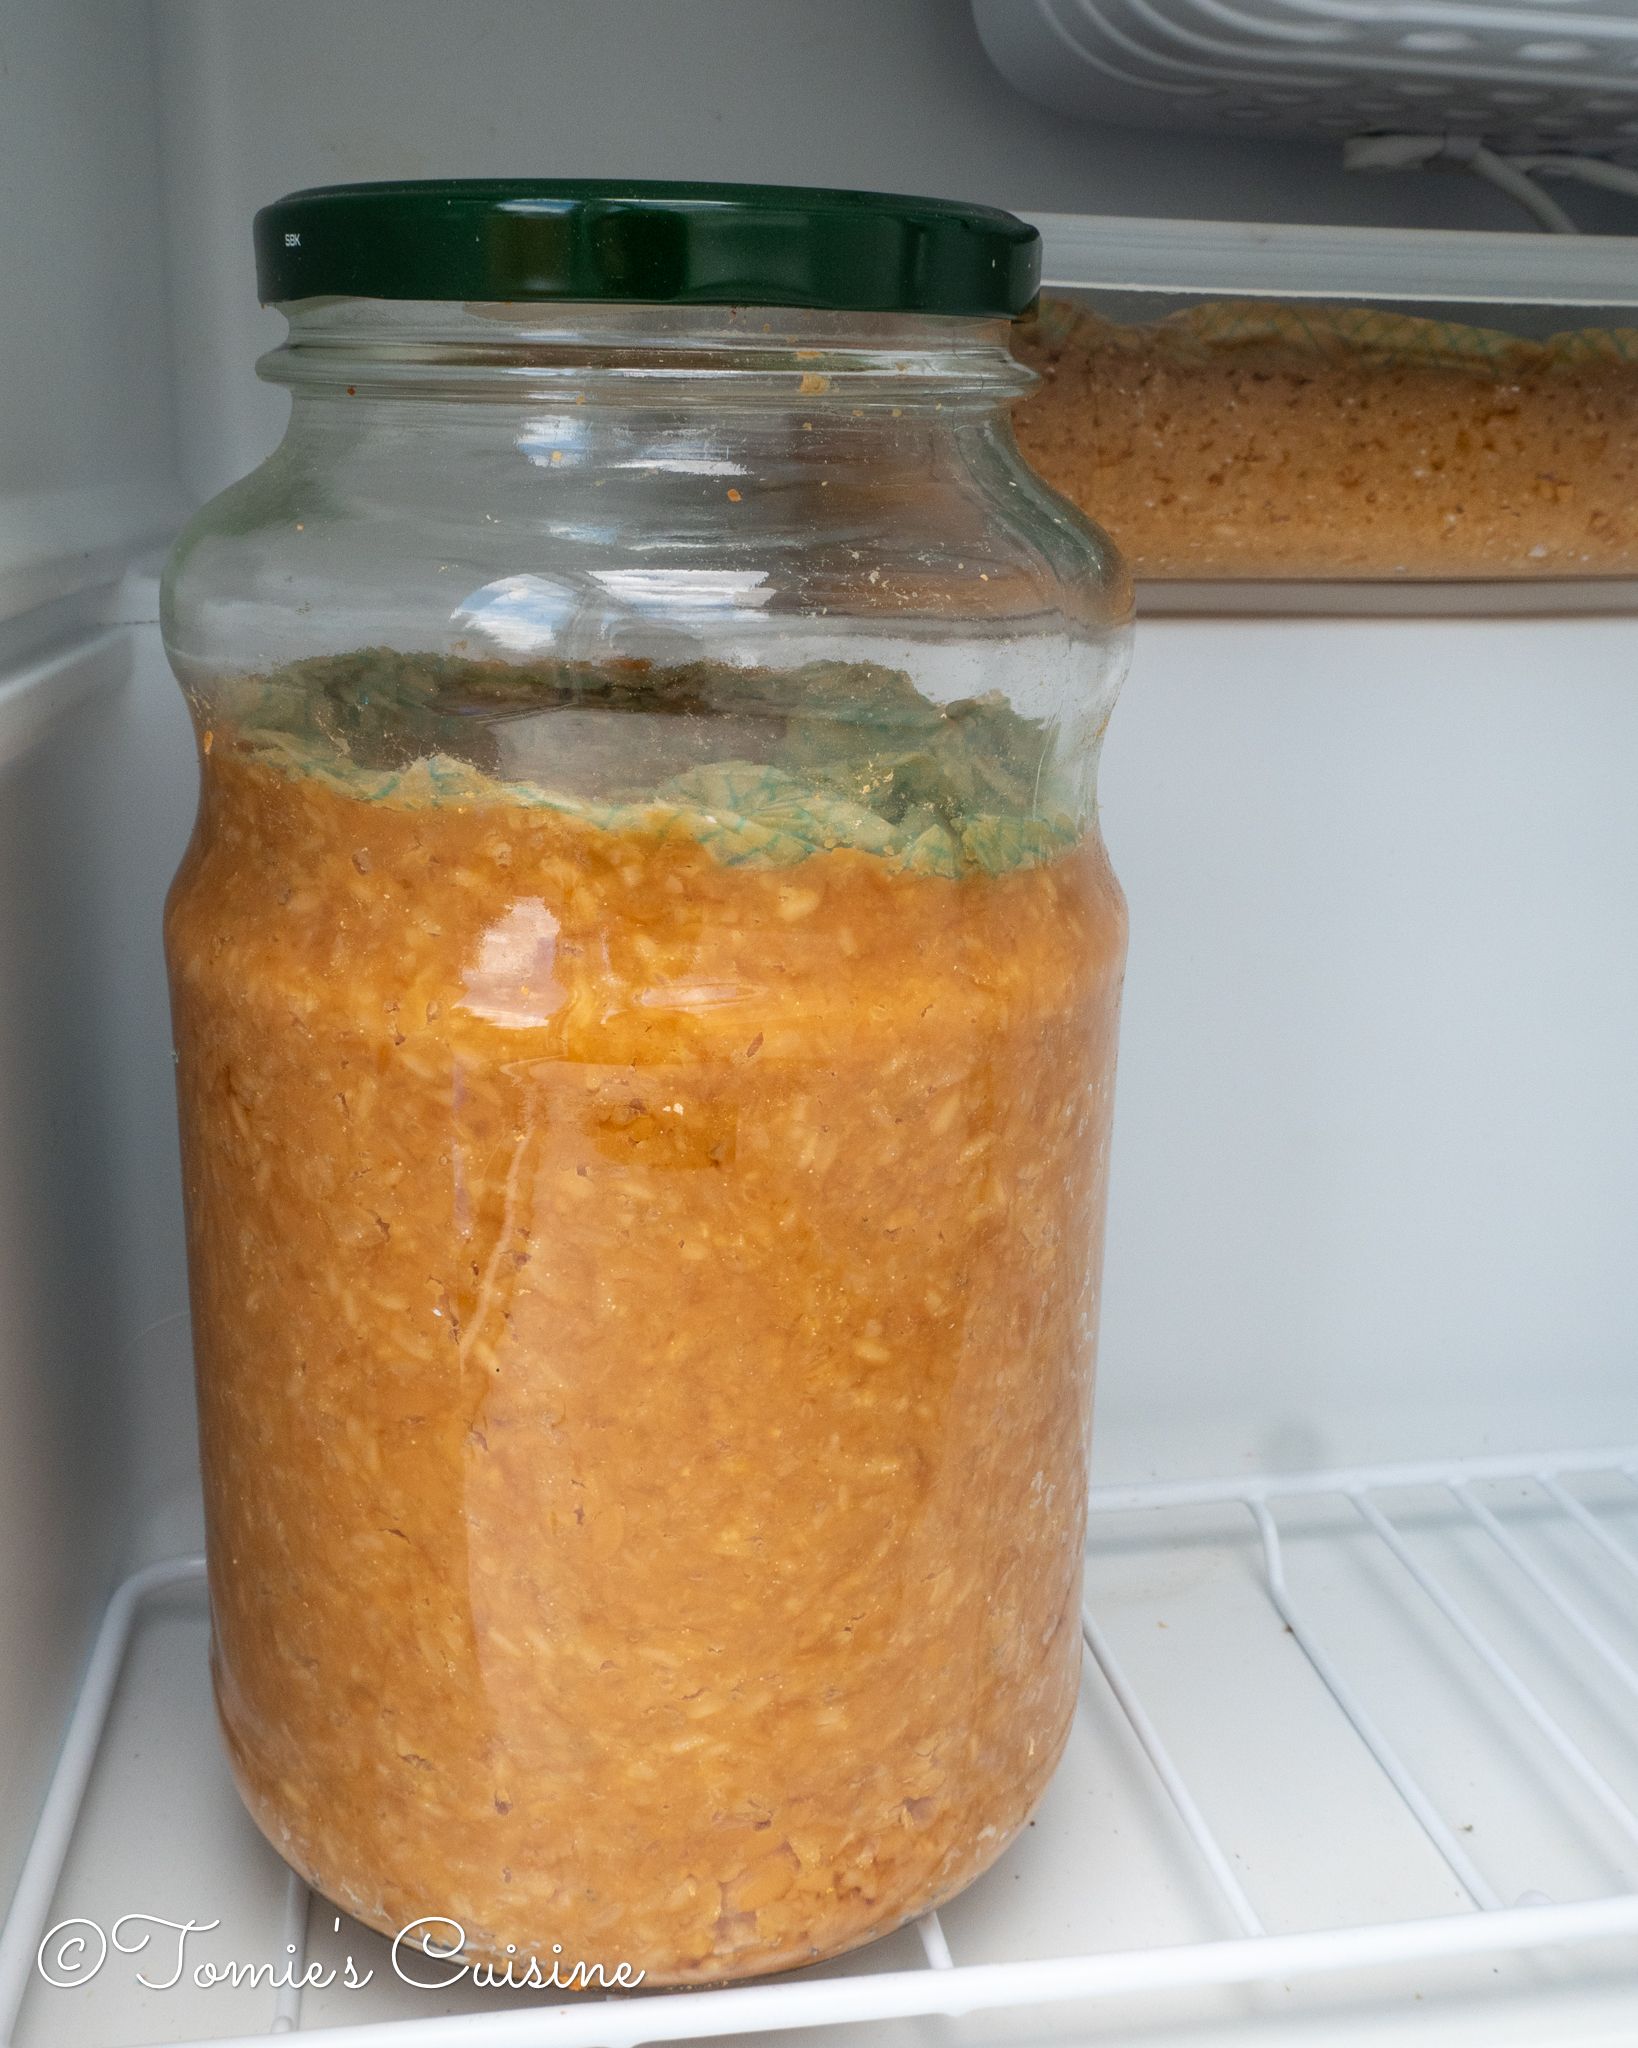 How to reuse glass food jars